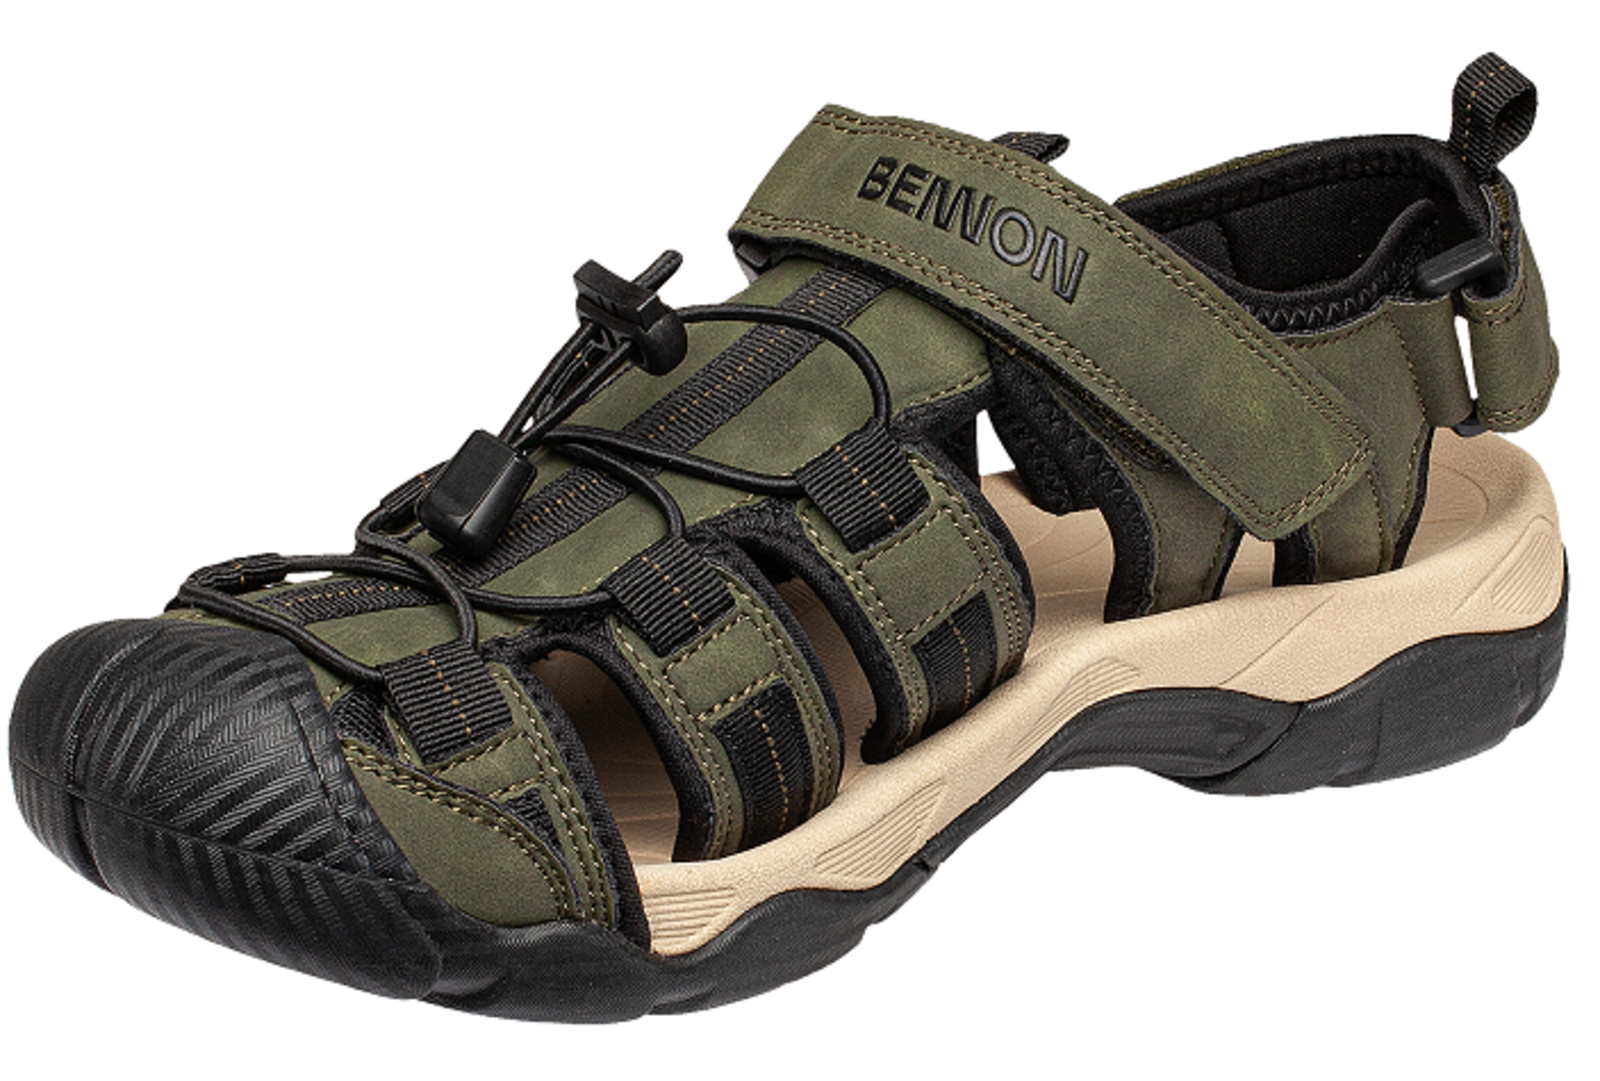 Ľahké sandále Bennon Amazon - veľkosť: 40, farba: zelená